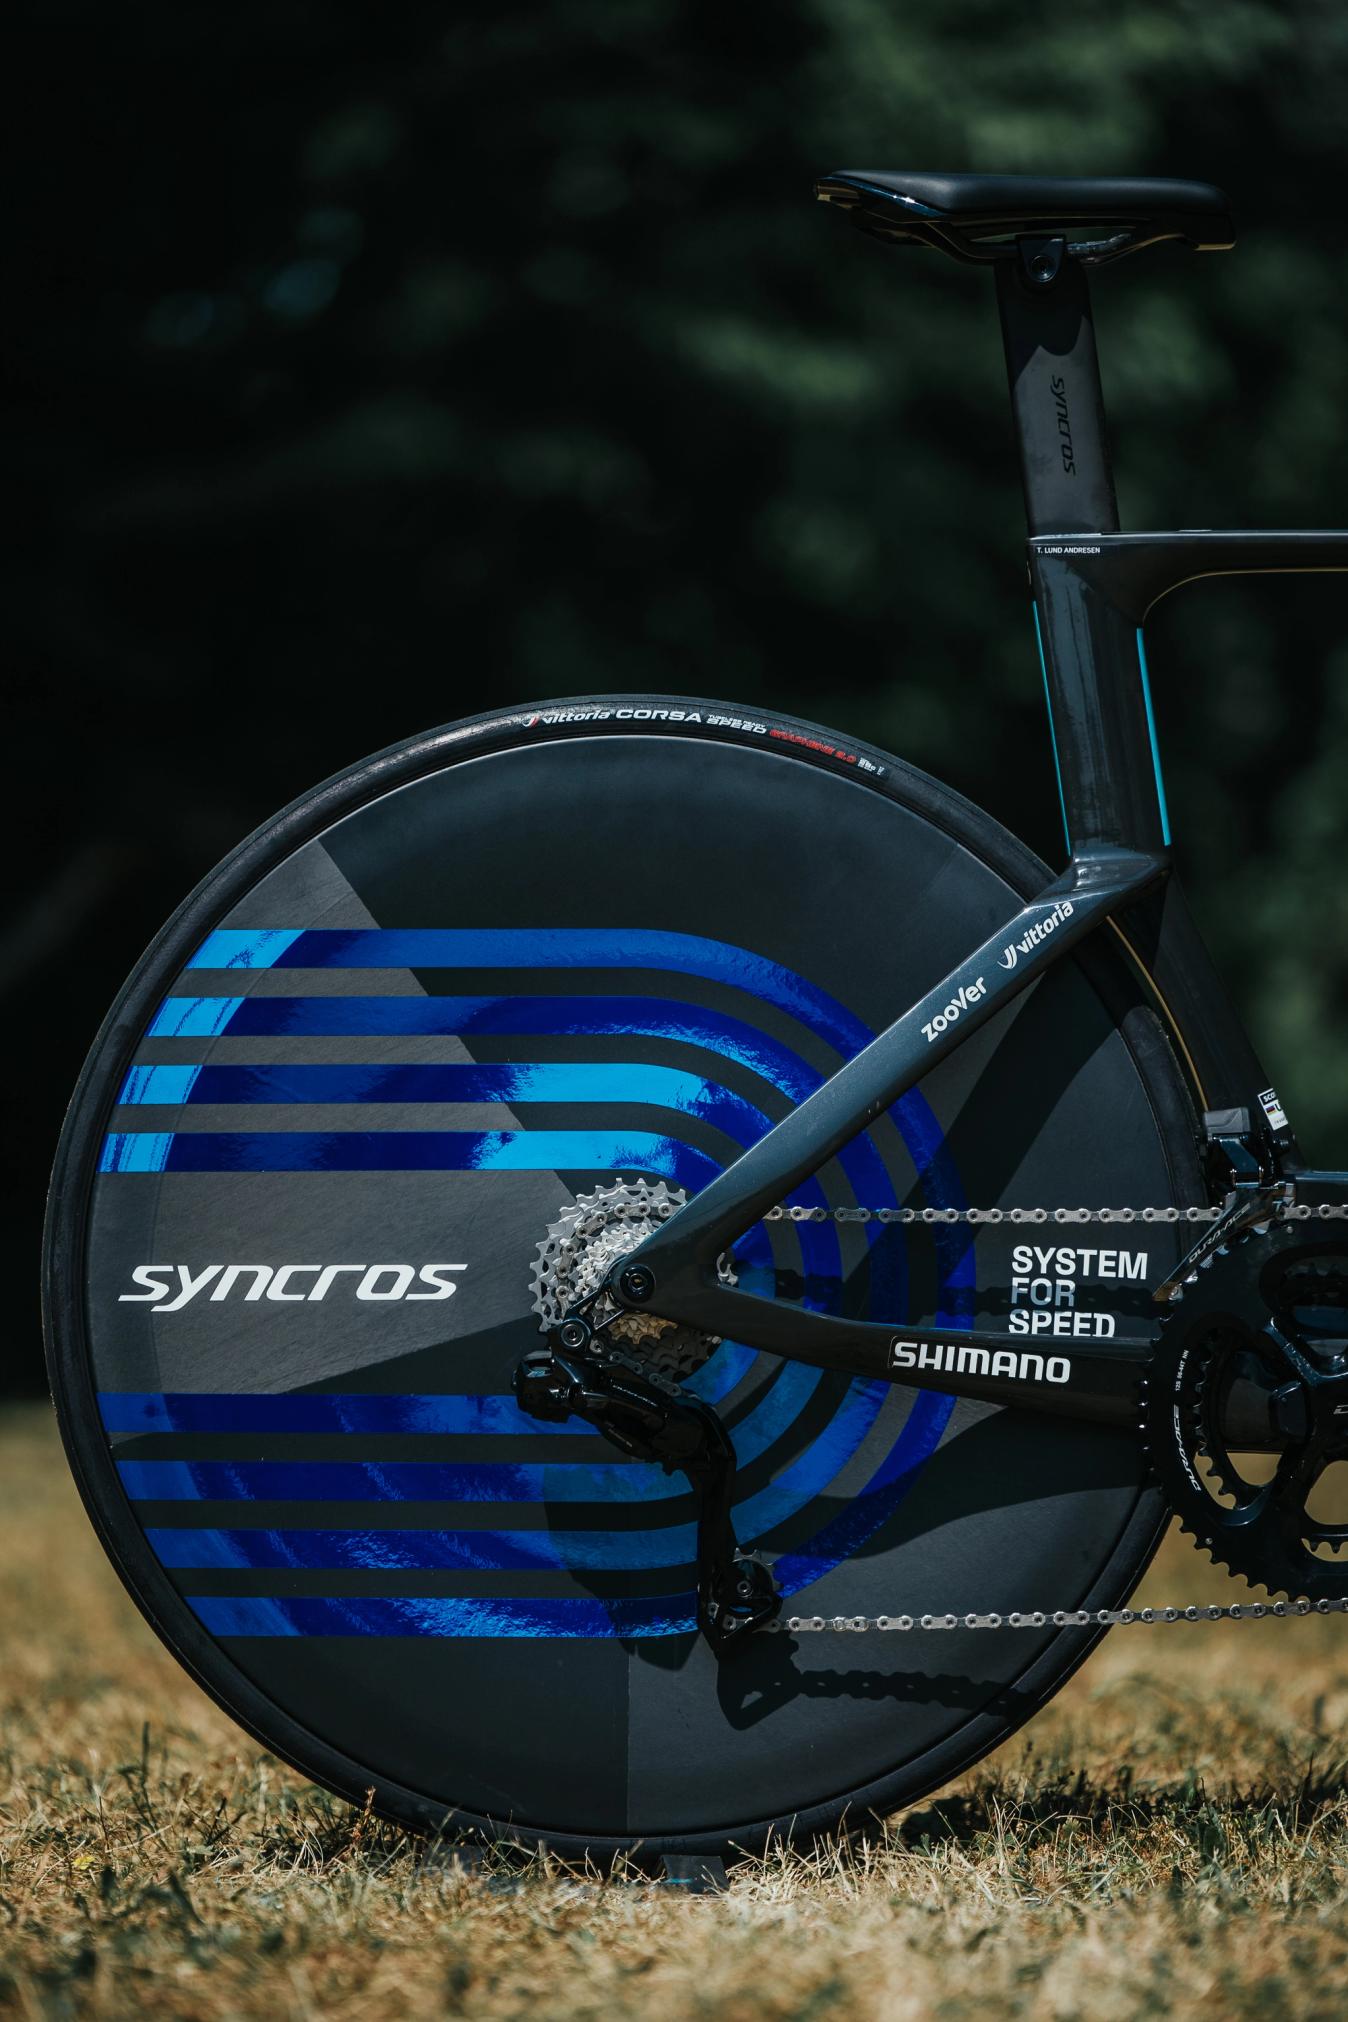 Syncros have custom-designed the rear disc wheel.